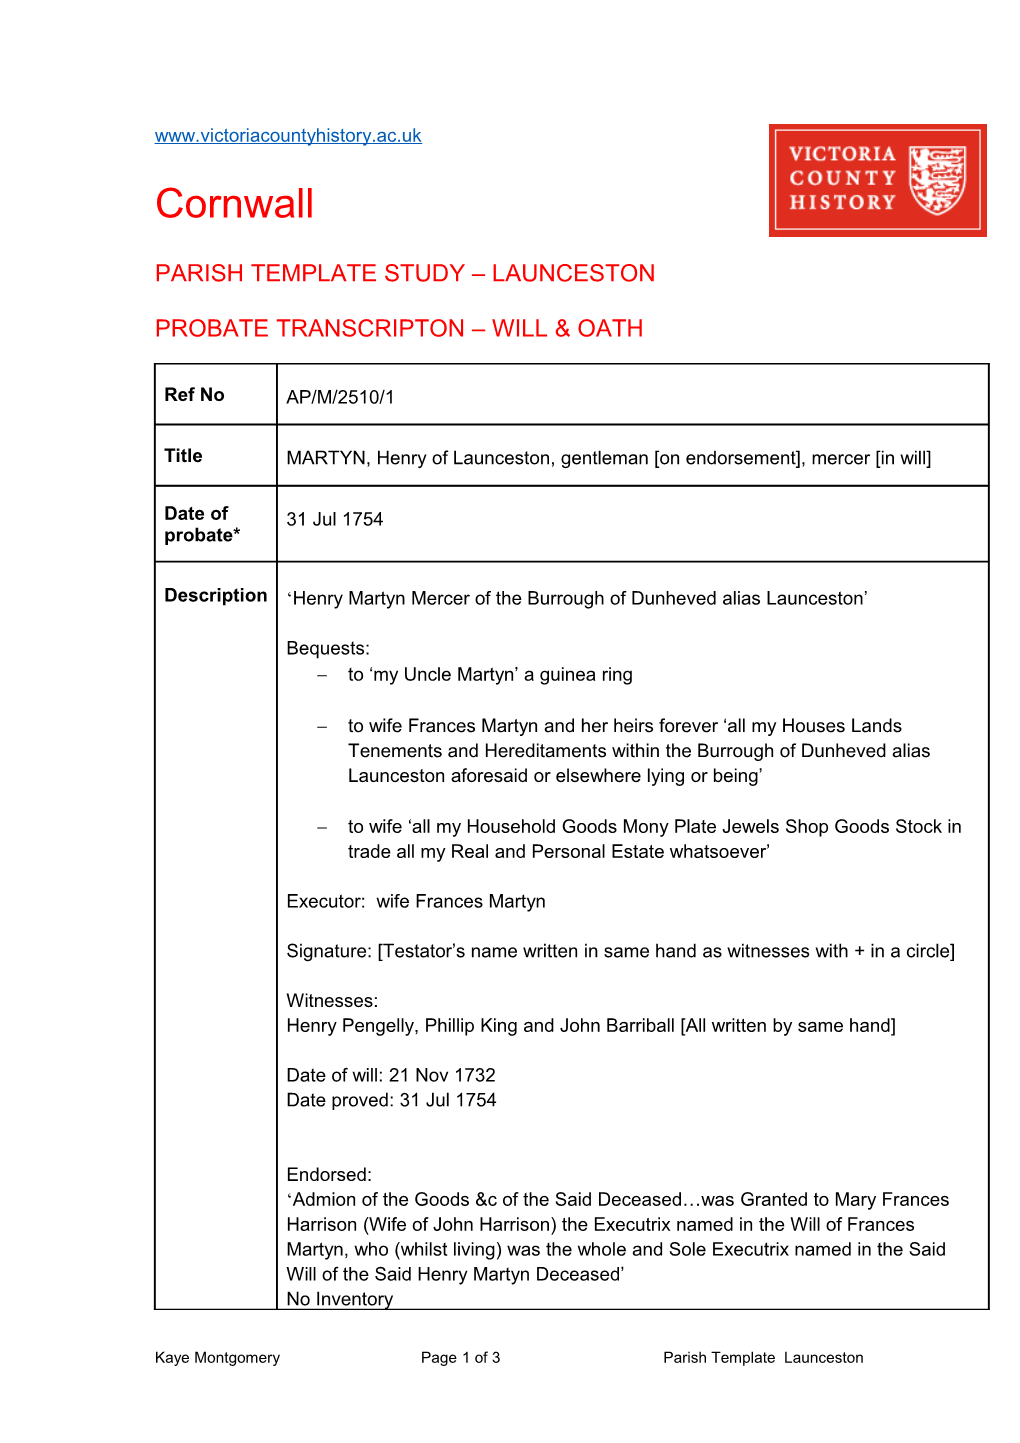 Parish Template Study Launceston s2